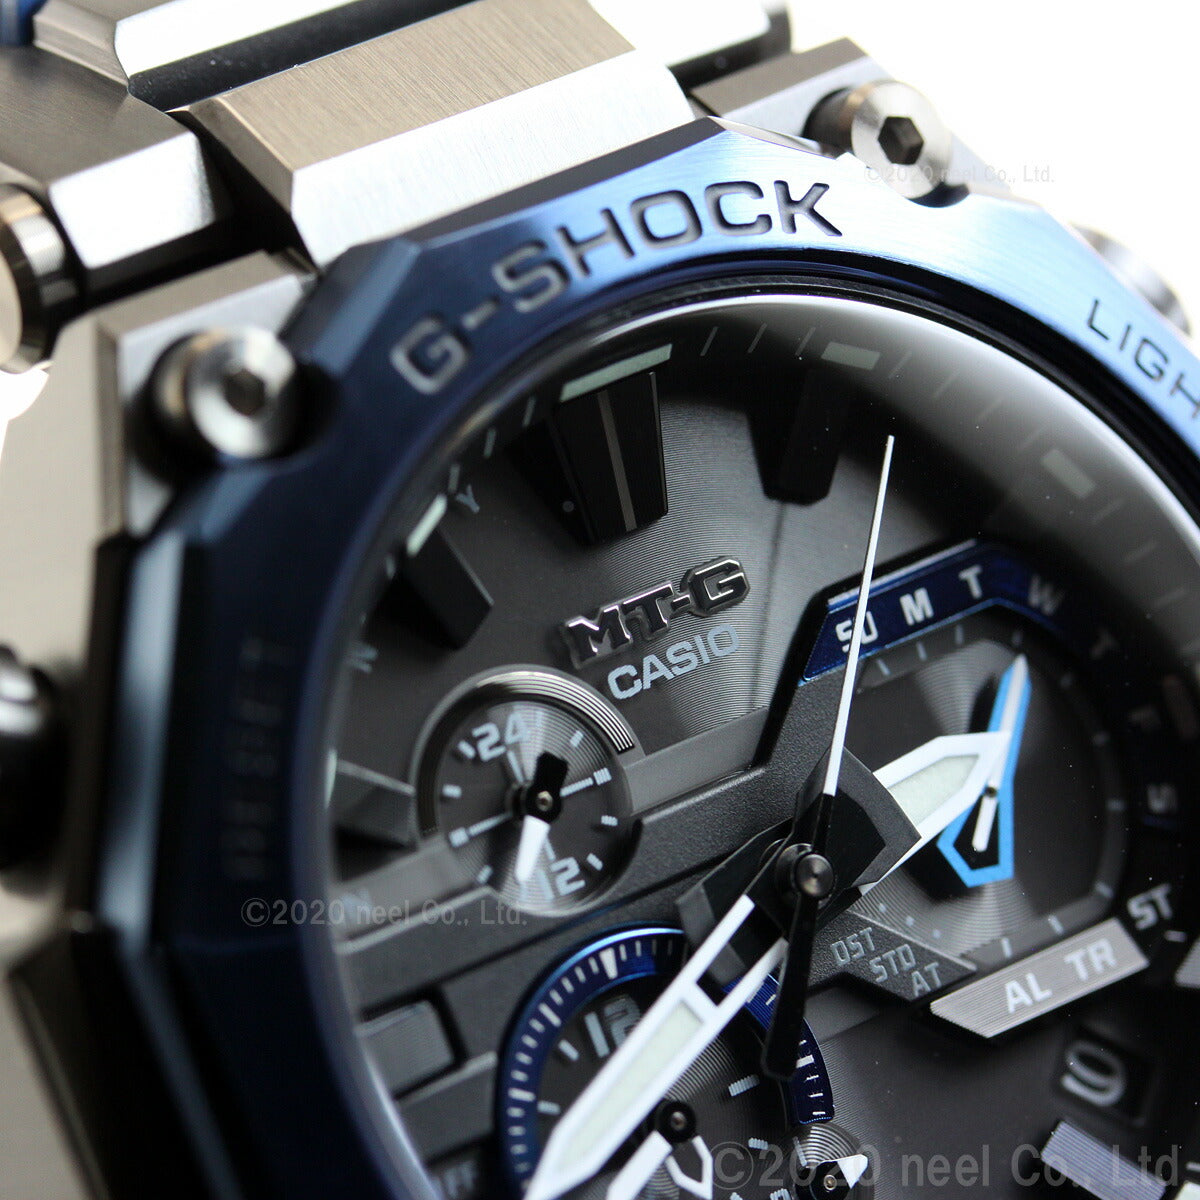 MT-G G-SHOCK 電波 ソーラー 電波時計 カシオ Gショック CASIO 腕時計 メンズ タフソーラー MTG-B2000B-1A2JF